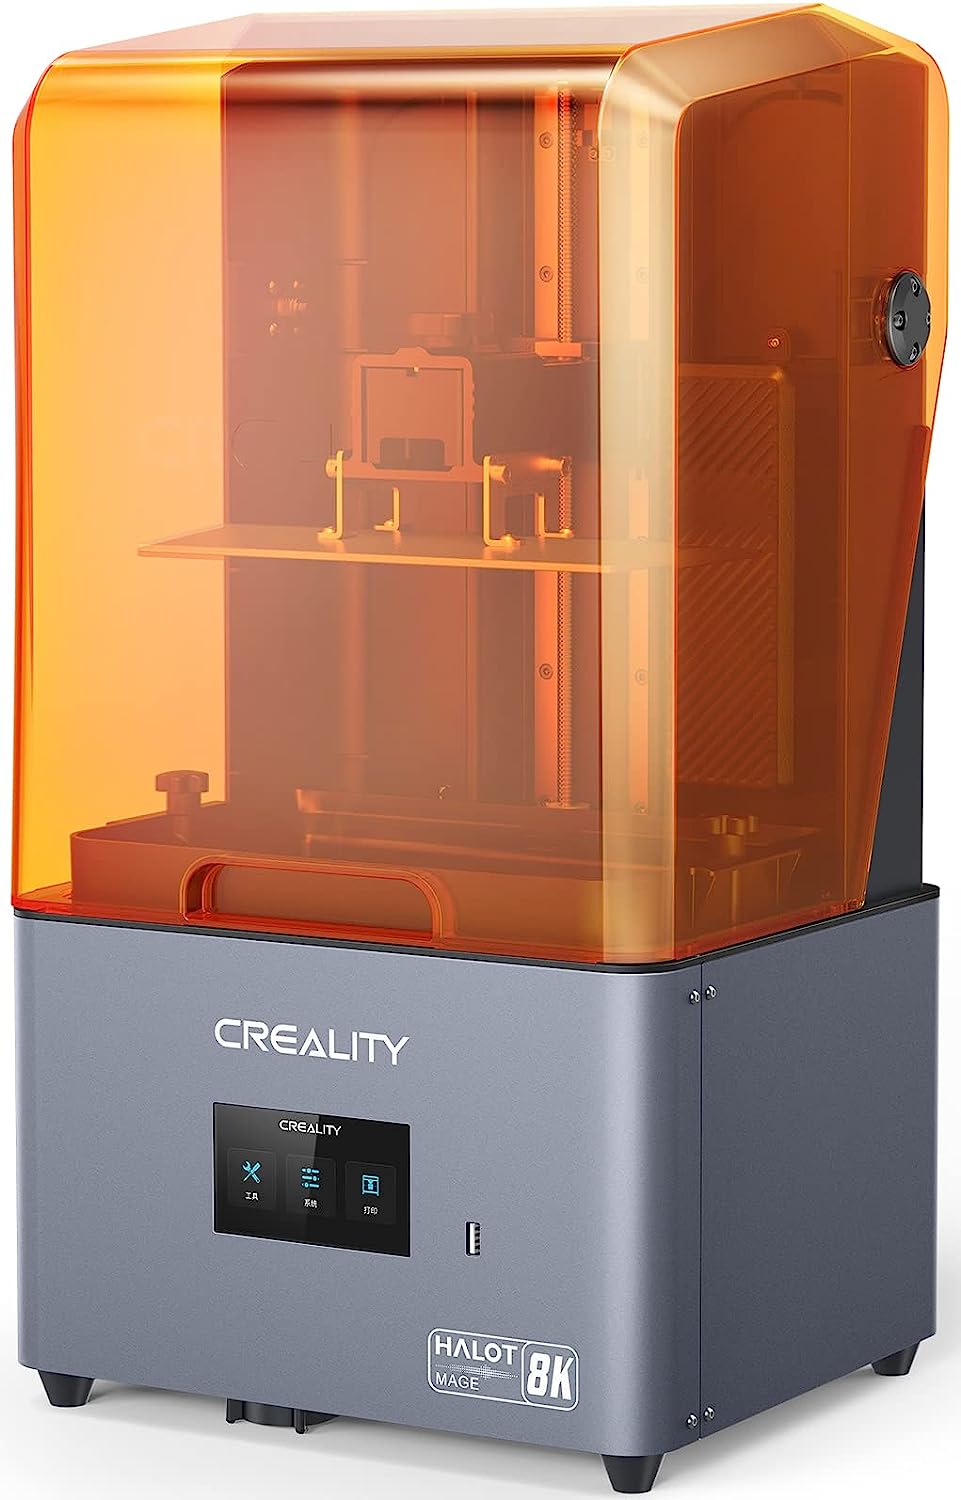 Creality Resin 3D Printer Halot-Mage, 8K Resolution [...]